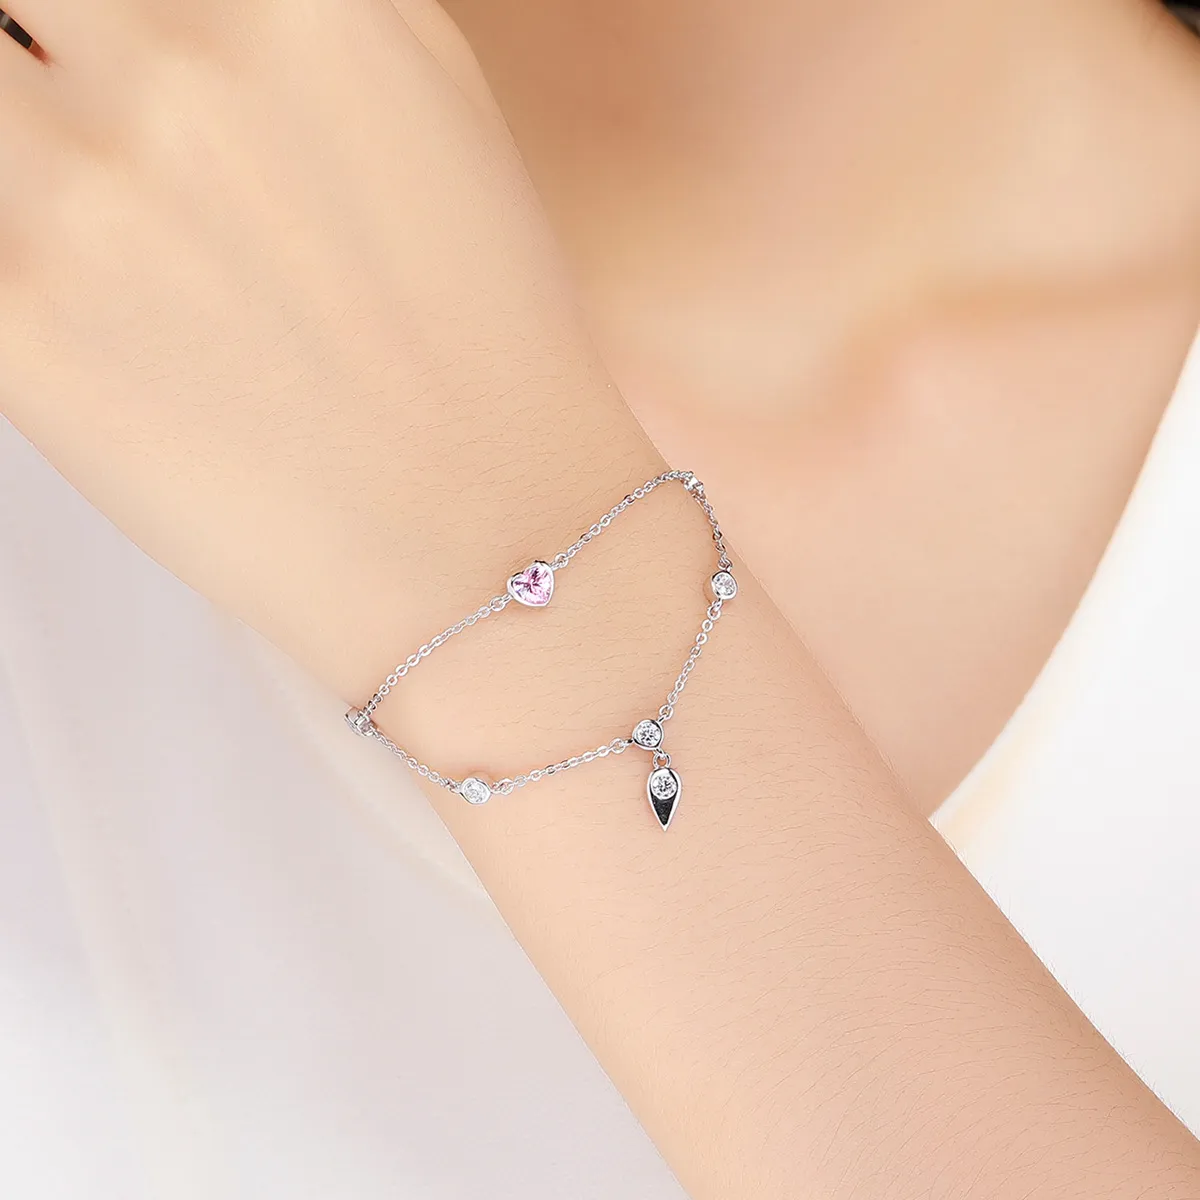 Pandora Style Silver Sweet Heart Chain Slider Bracelet - SCB090